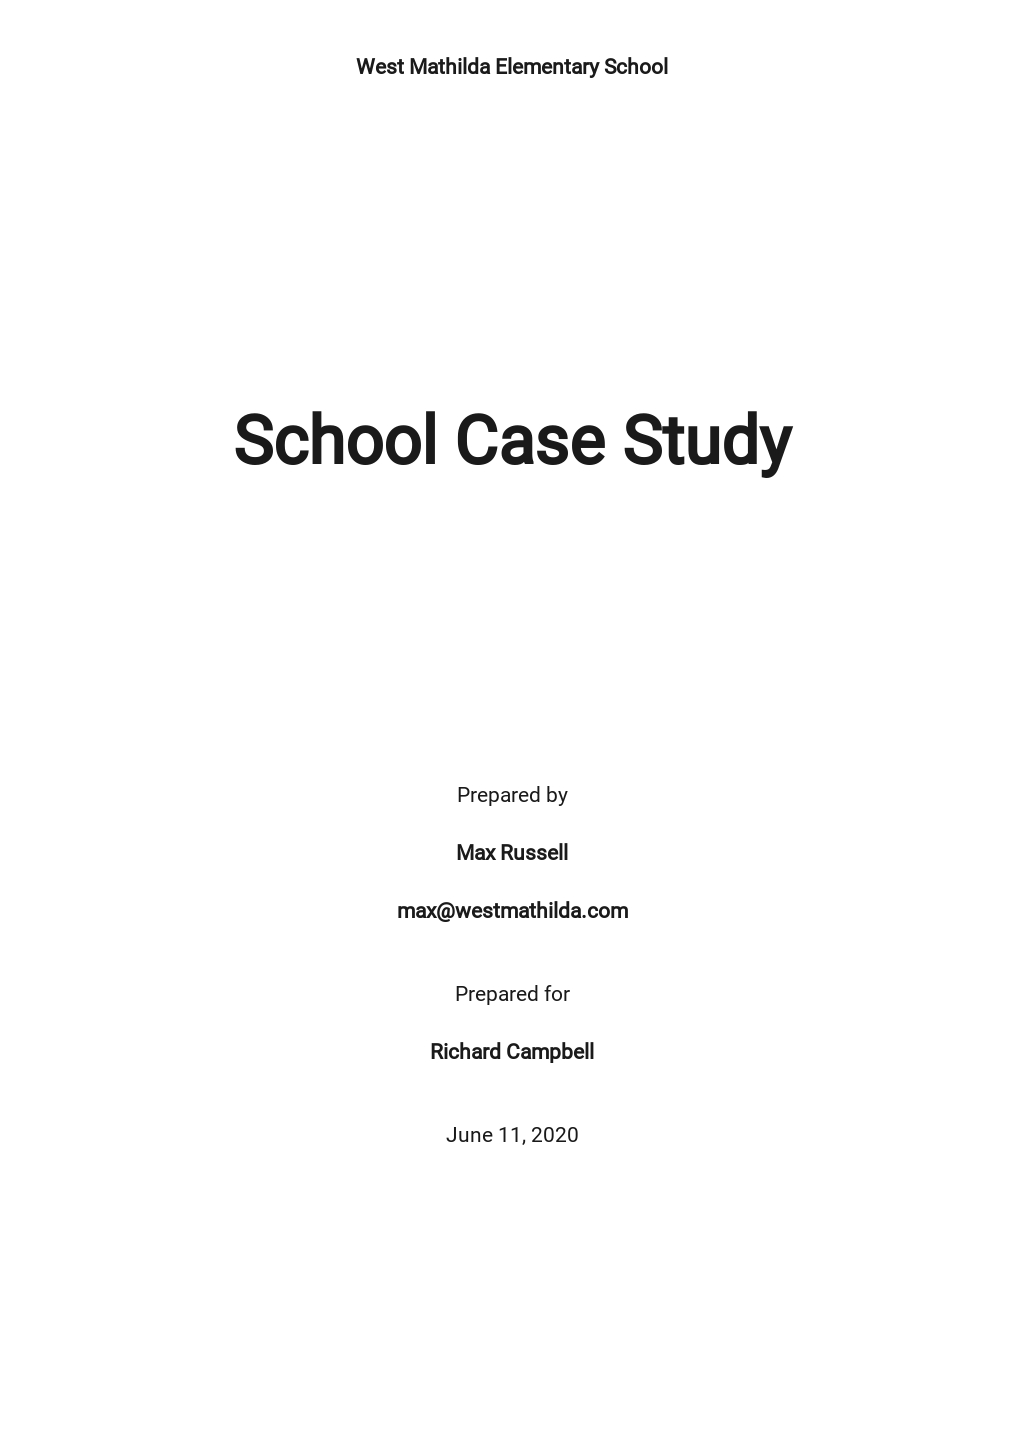 School Case Study Analysis Template.jpe